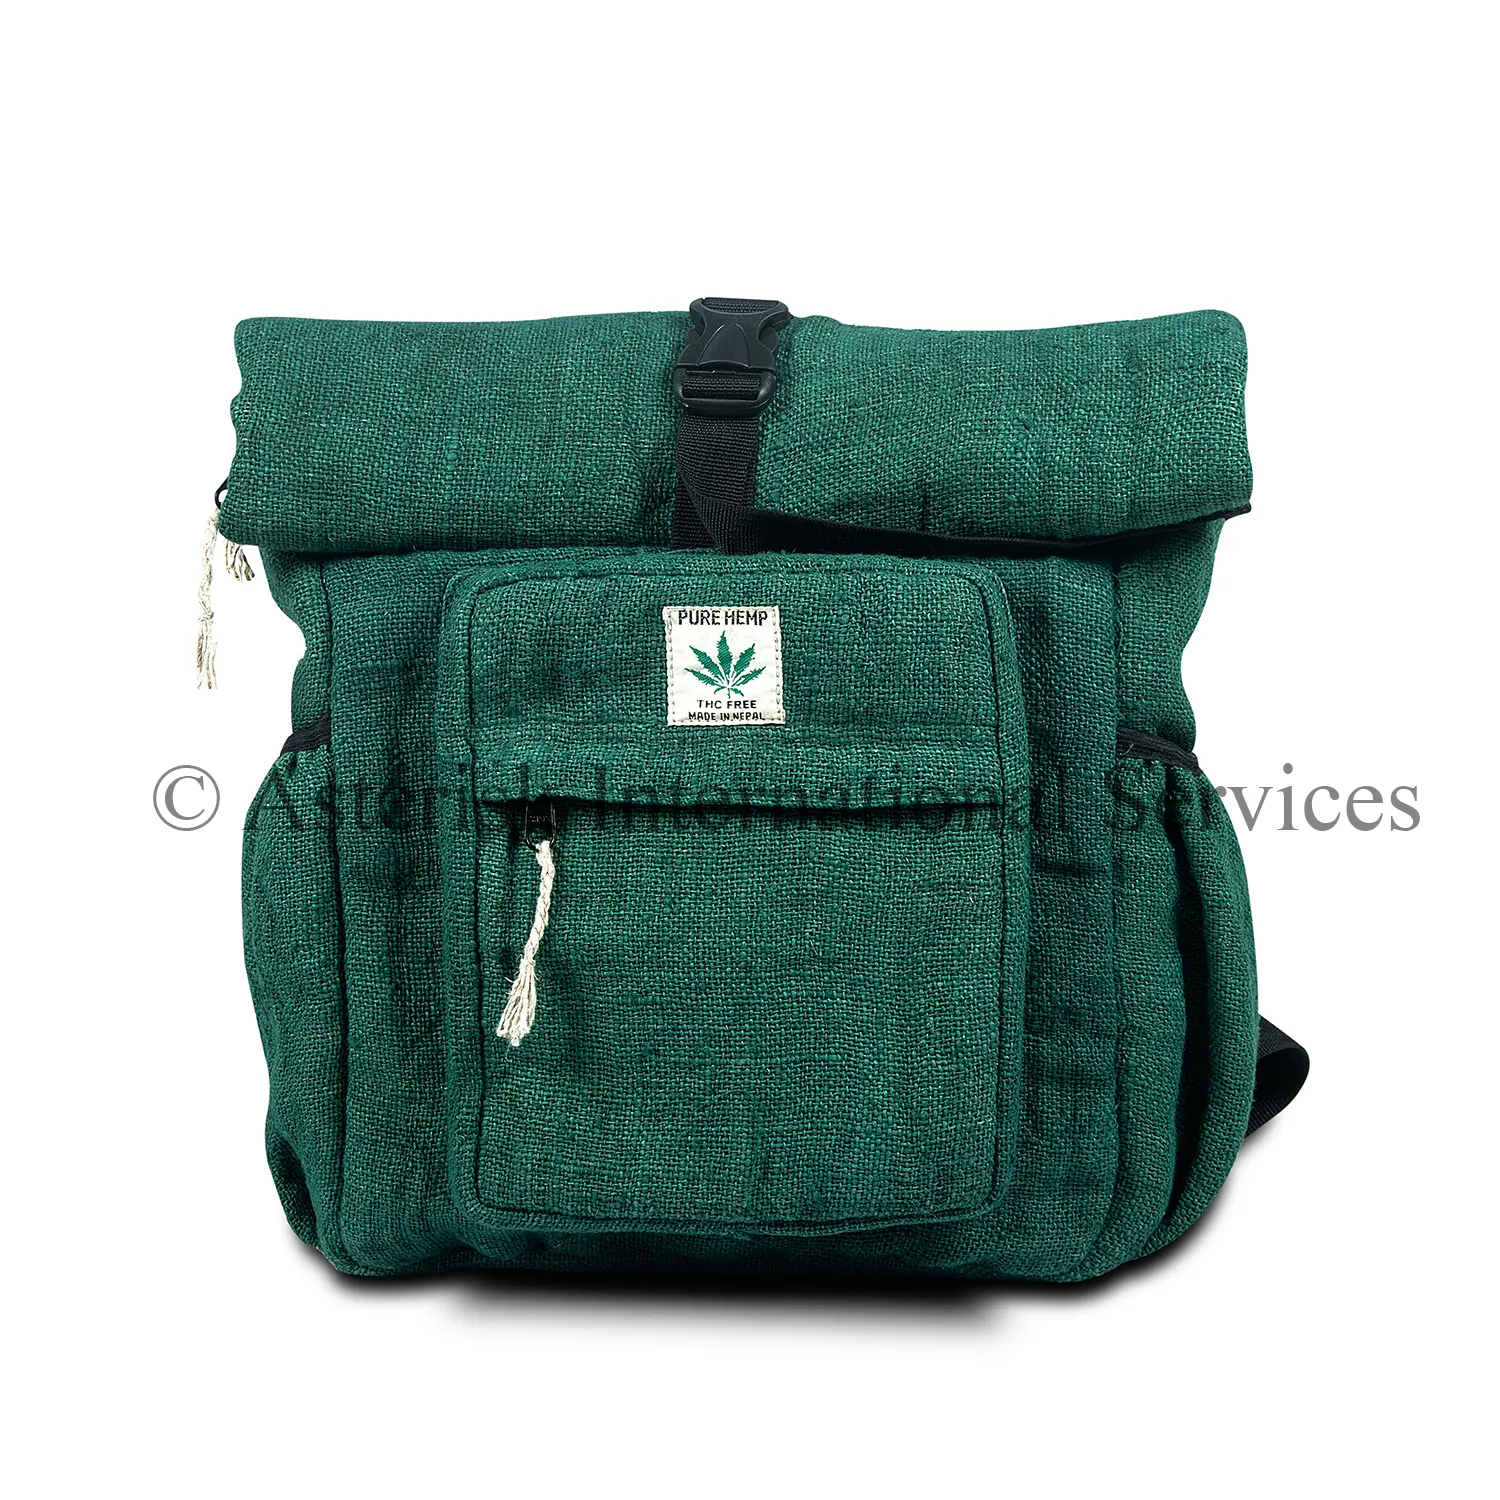 Large Capacity Hemp Backpack For Travel 100% Pure Nepal Hemp Backpack Vegan Fashion School and College Shoulder Hemp Bag Made